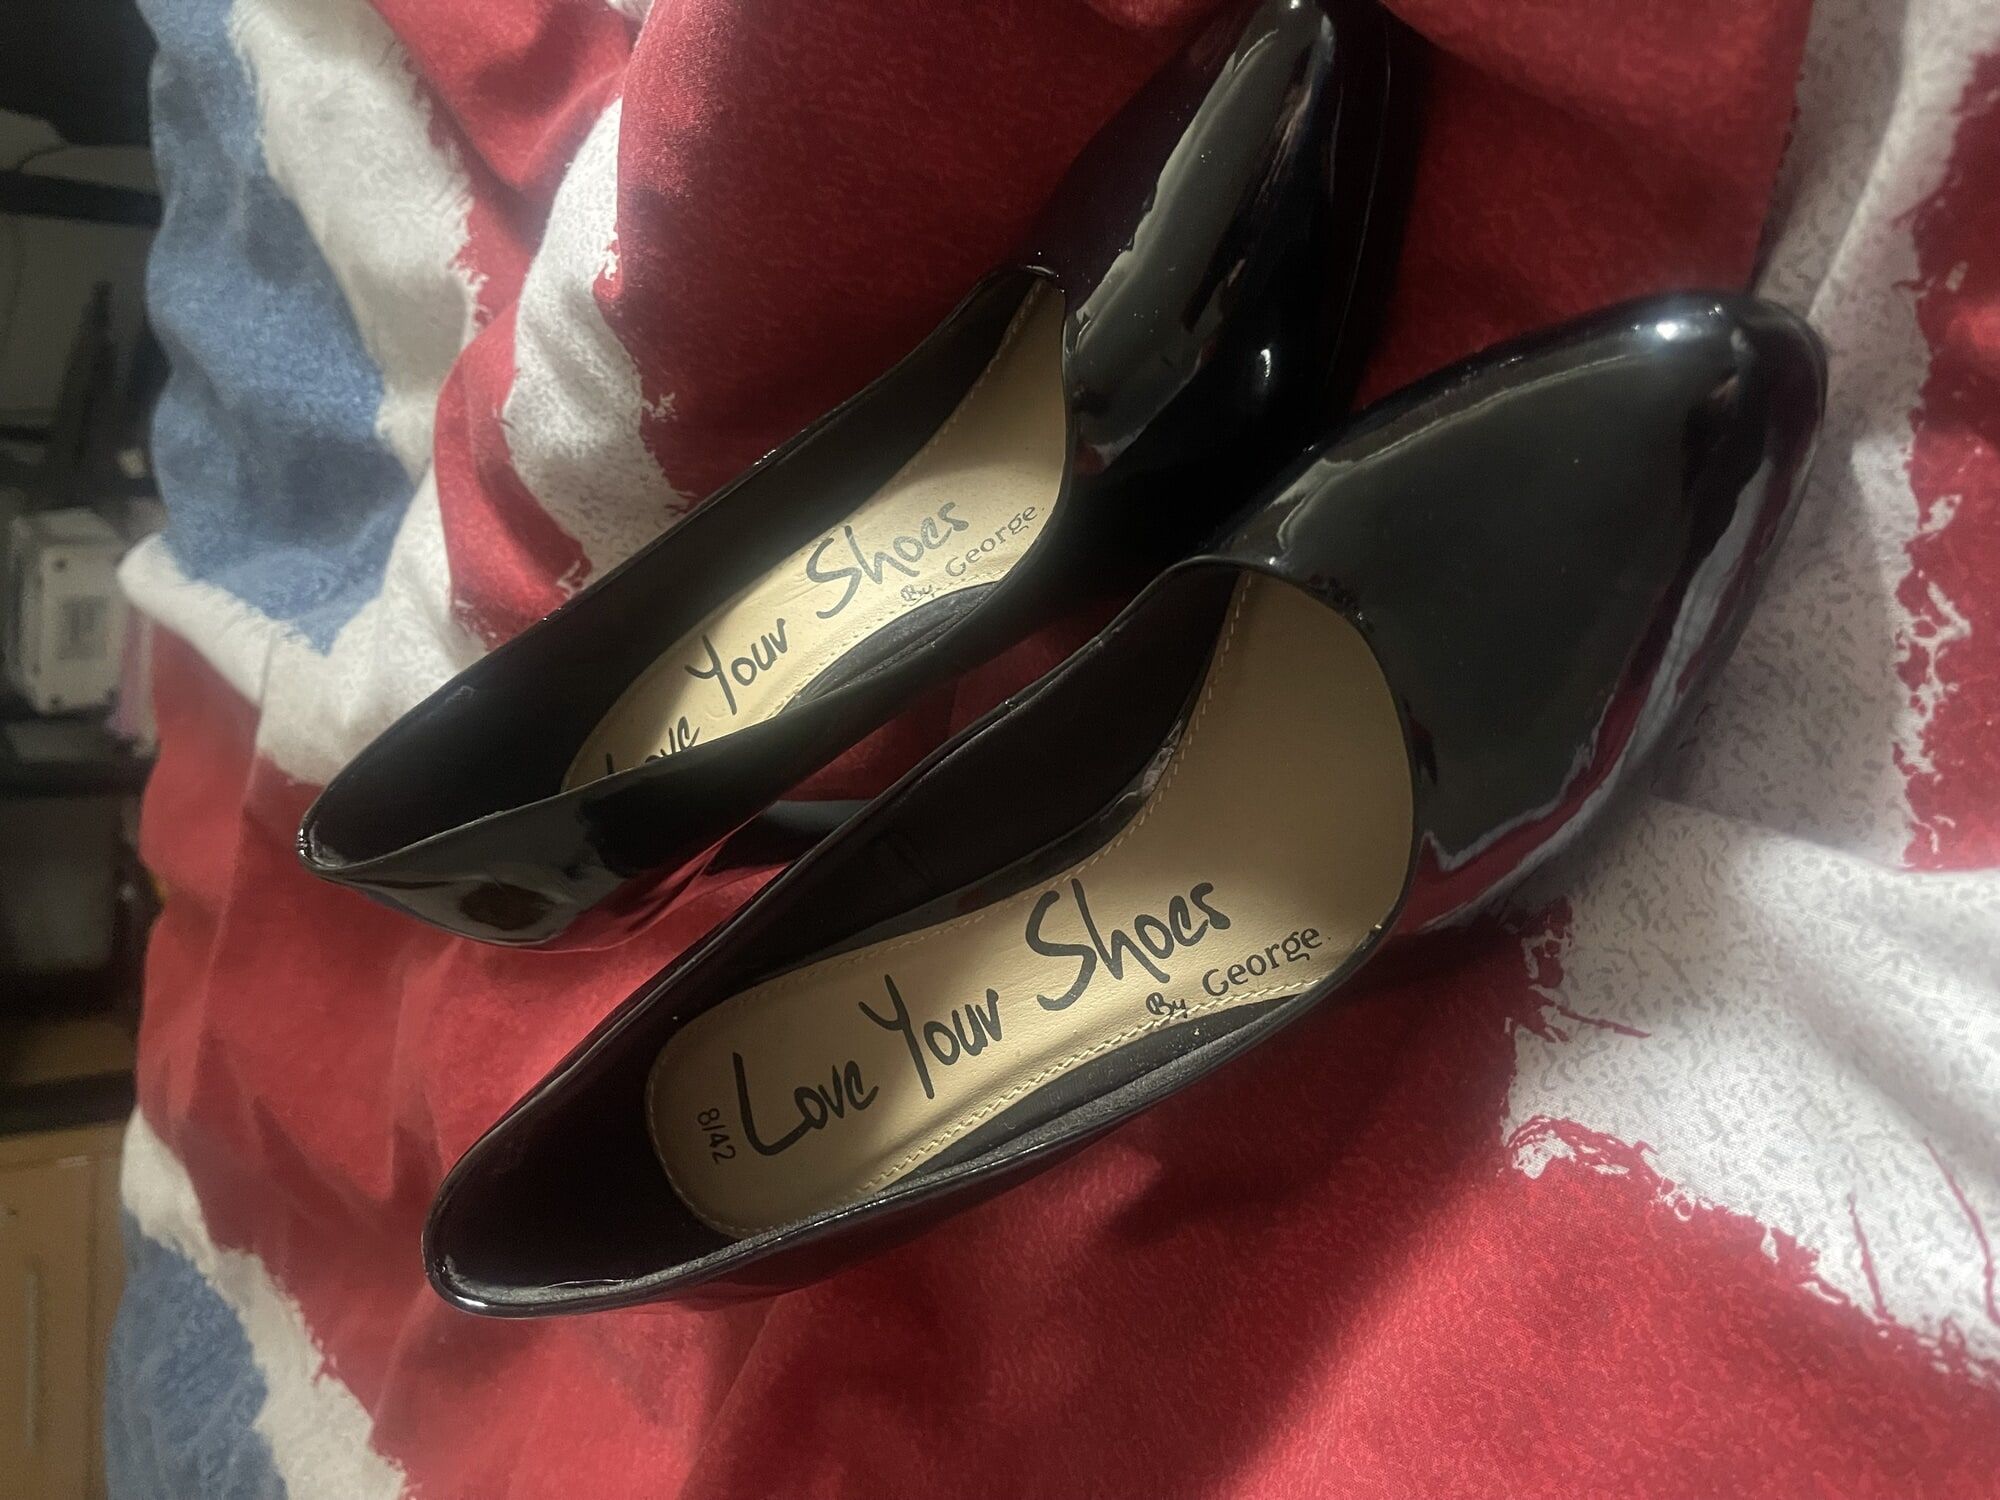 New patent black heels #3